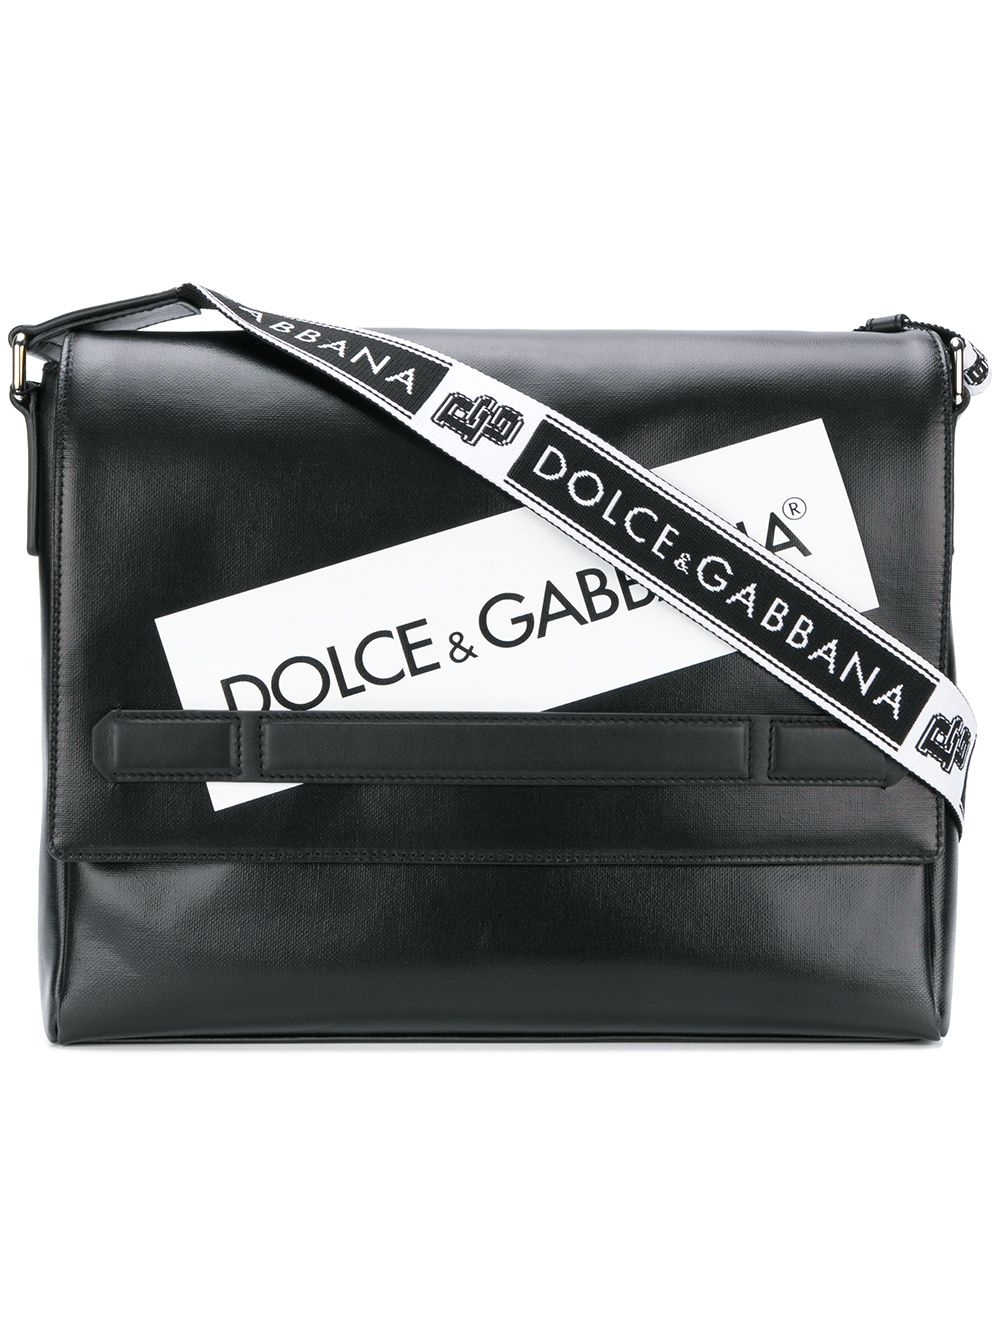 фото Dolce & gabbana сумка-почтальонка с логотипом